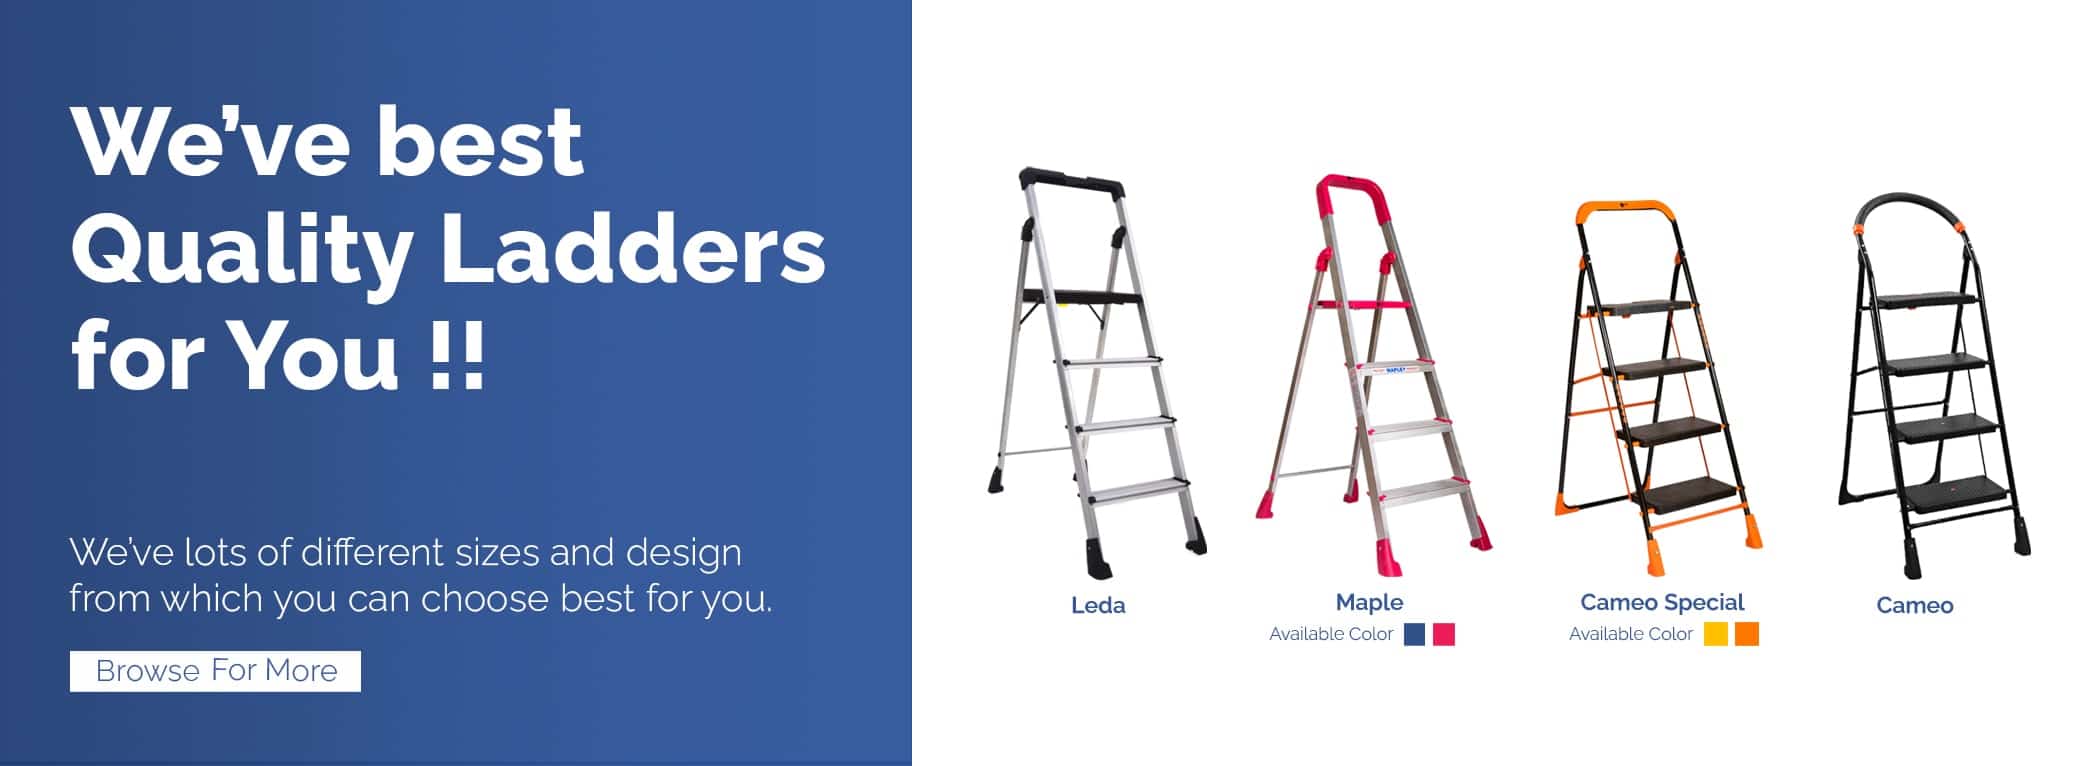 step ladders